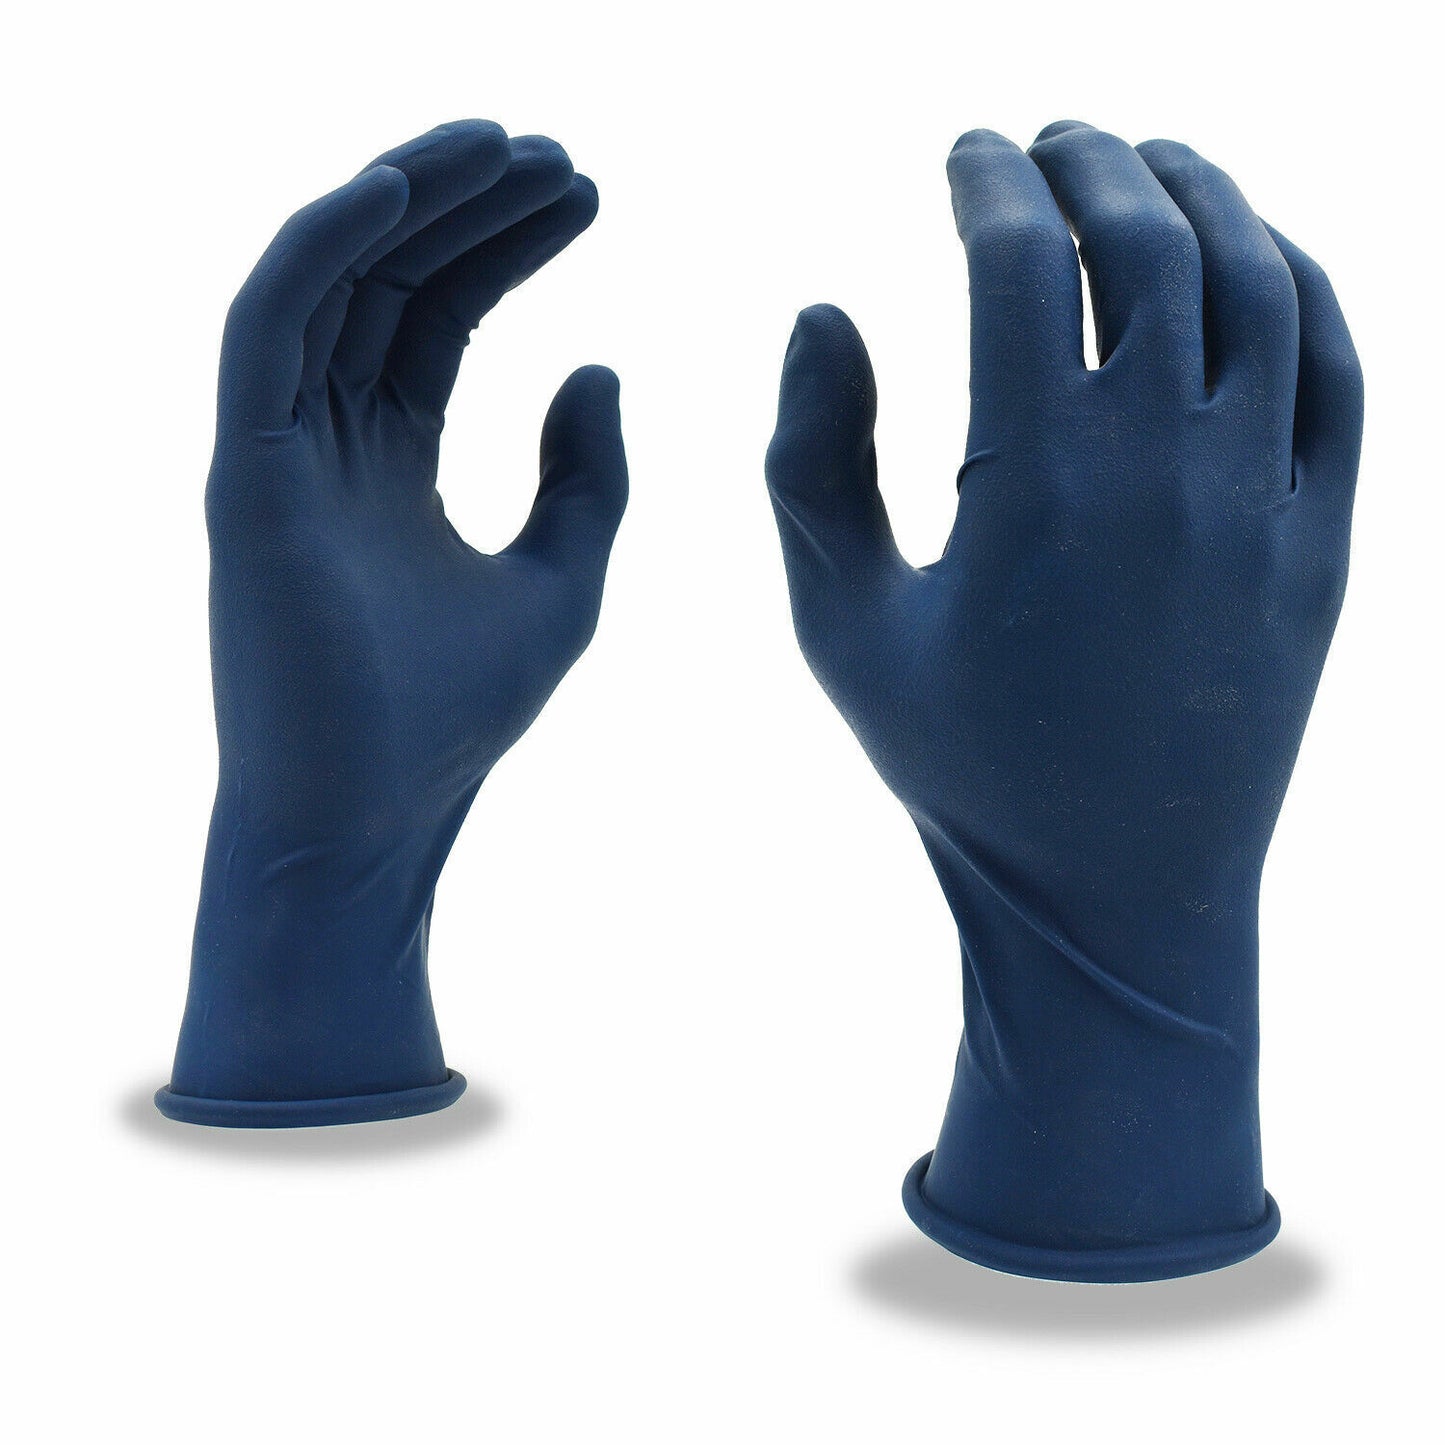 100 Royal Blue Small Nitrile Disposable Gloves Powder Free Mechanic Valet Barber